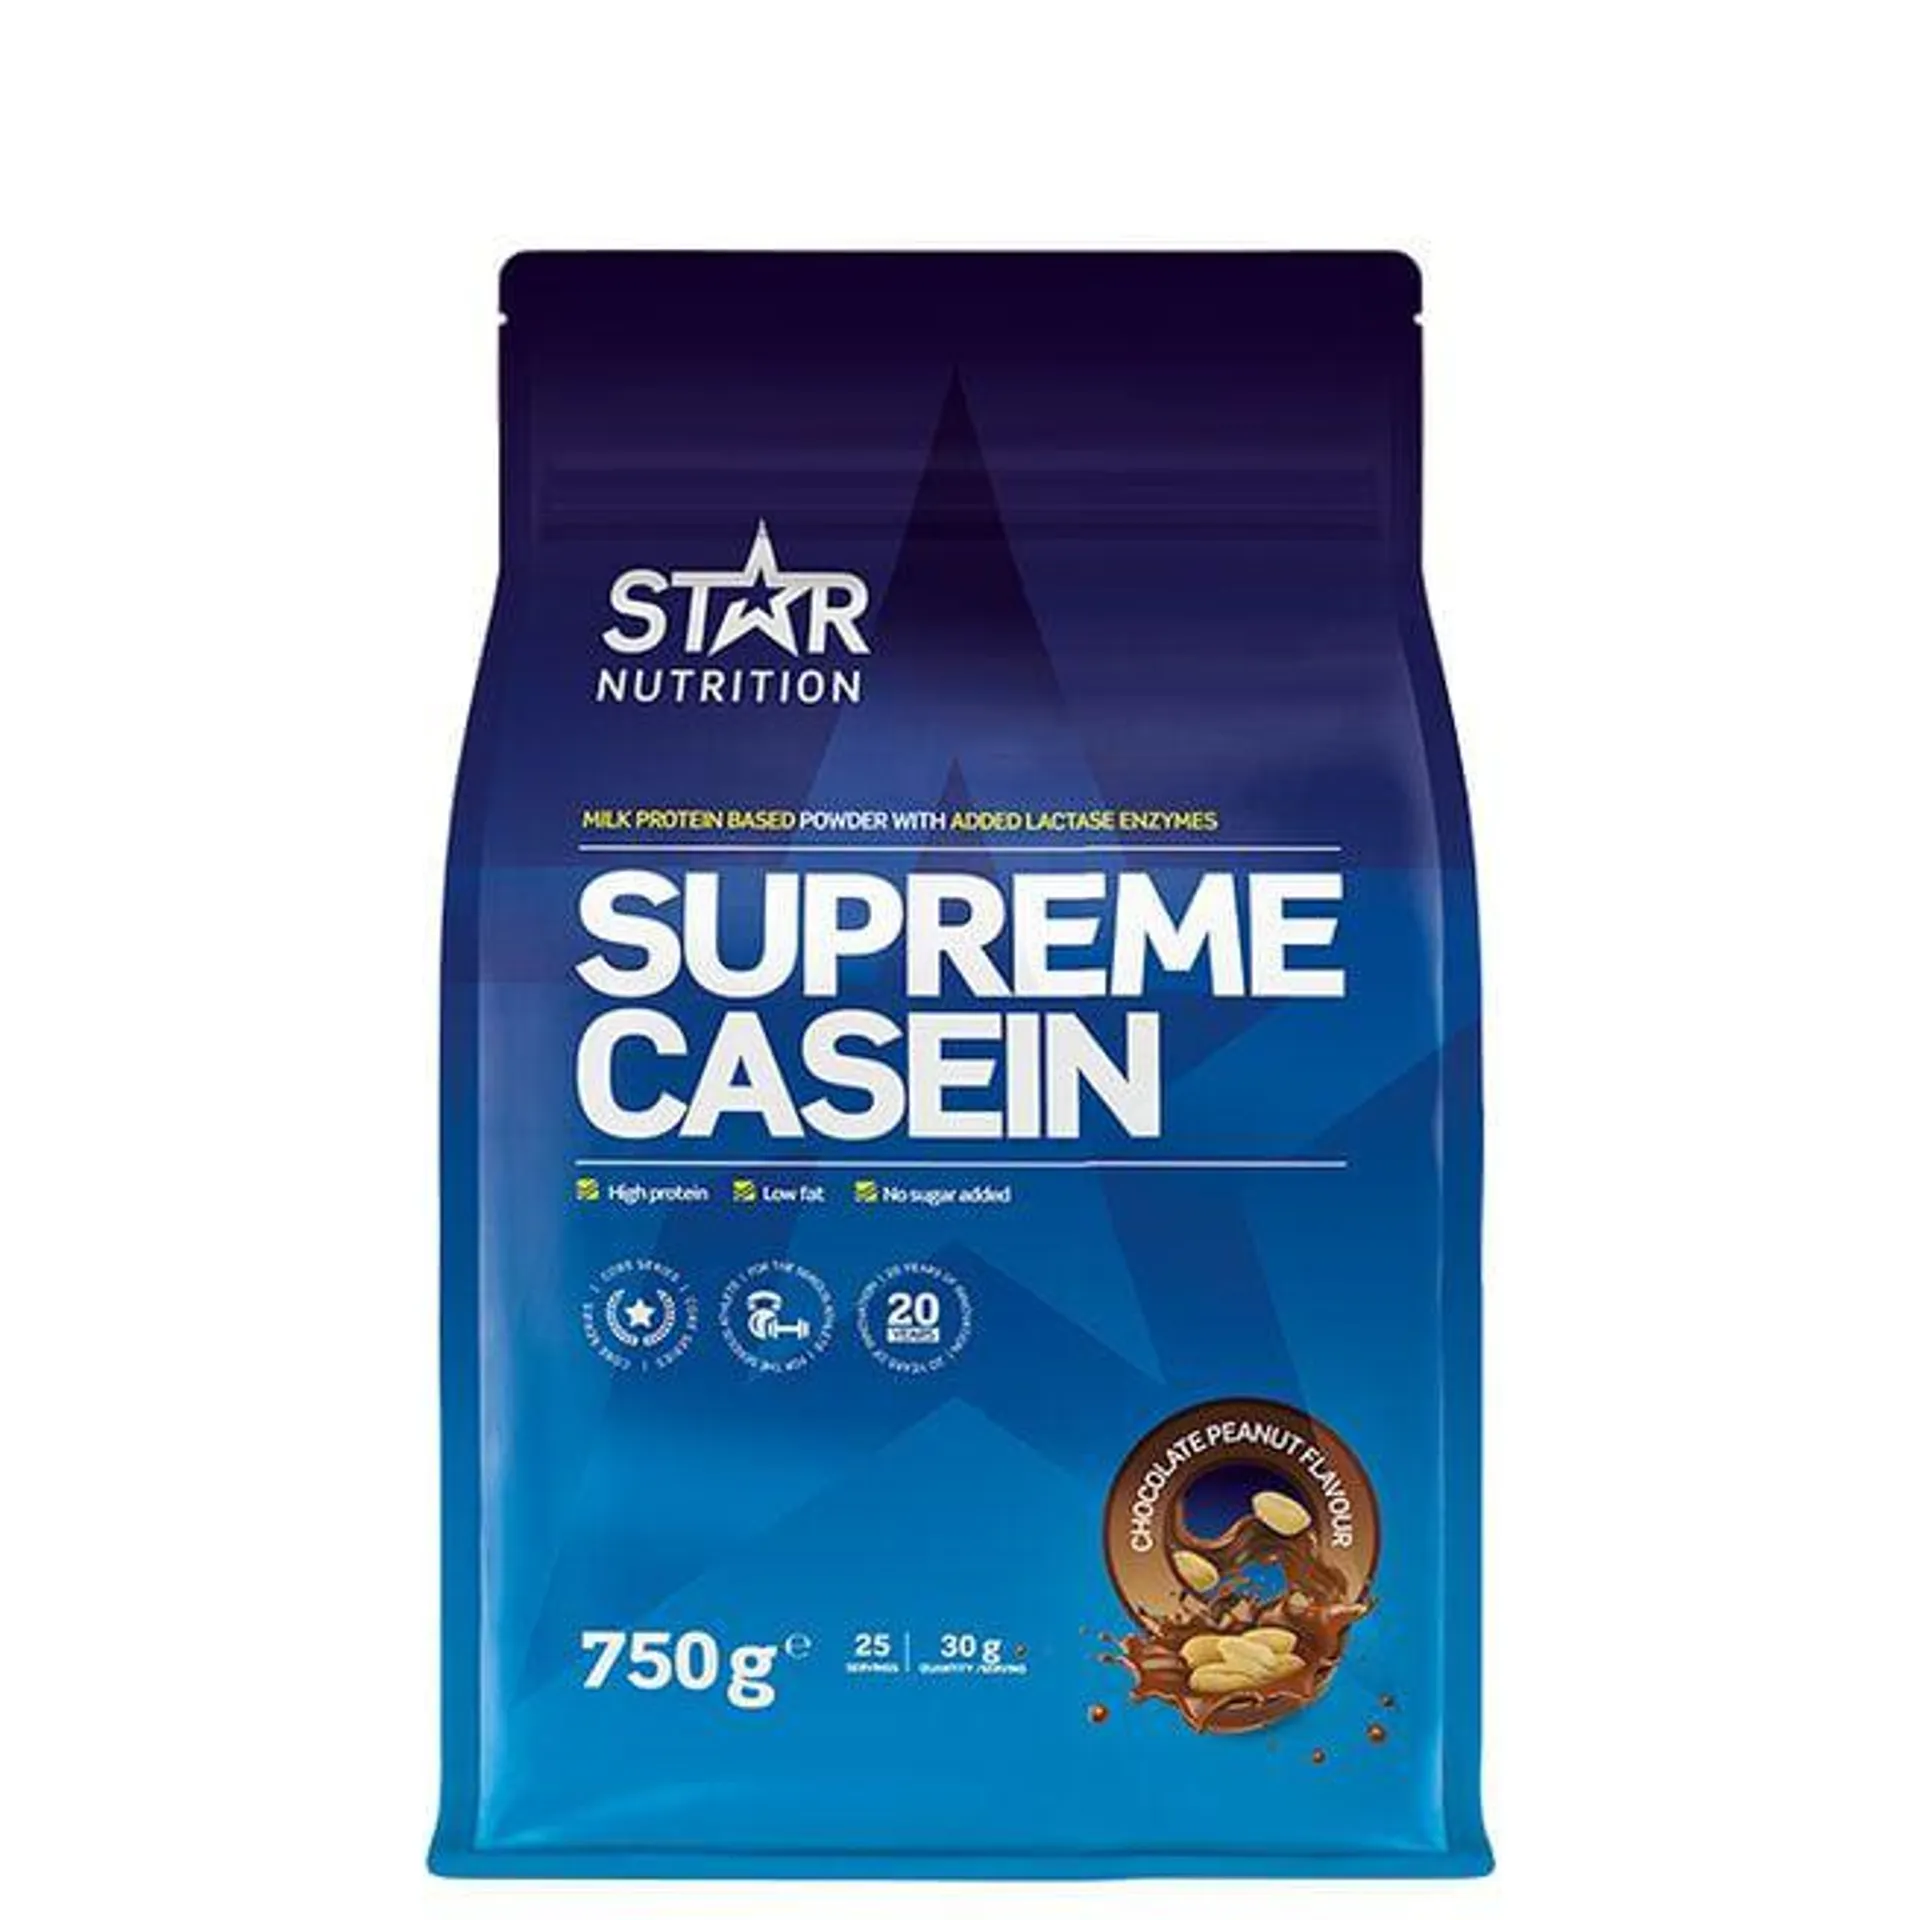 Supreme Casein, 750g Chocolate Peanut